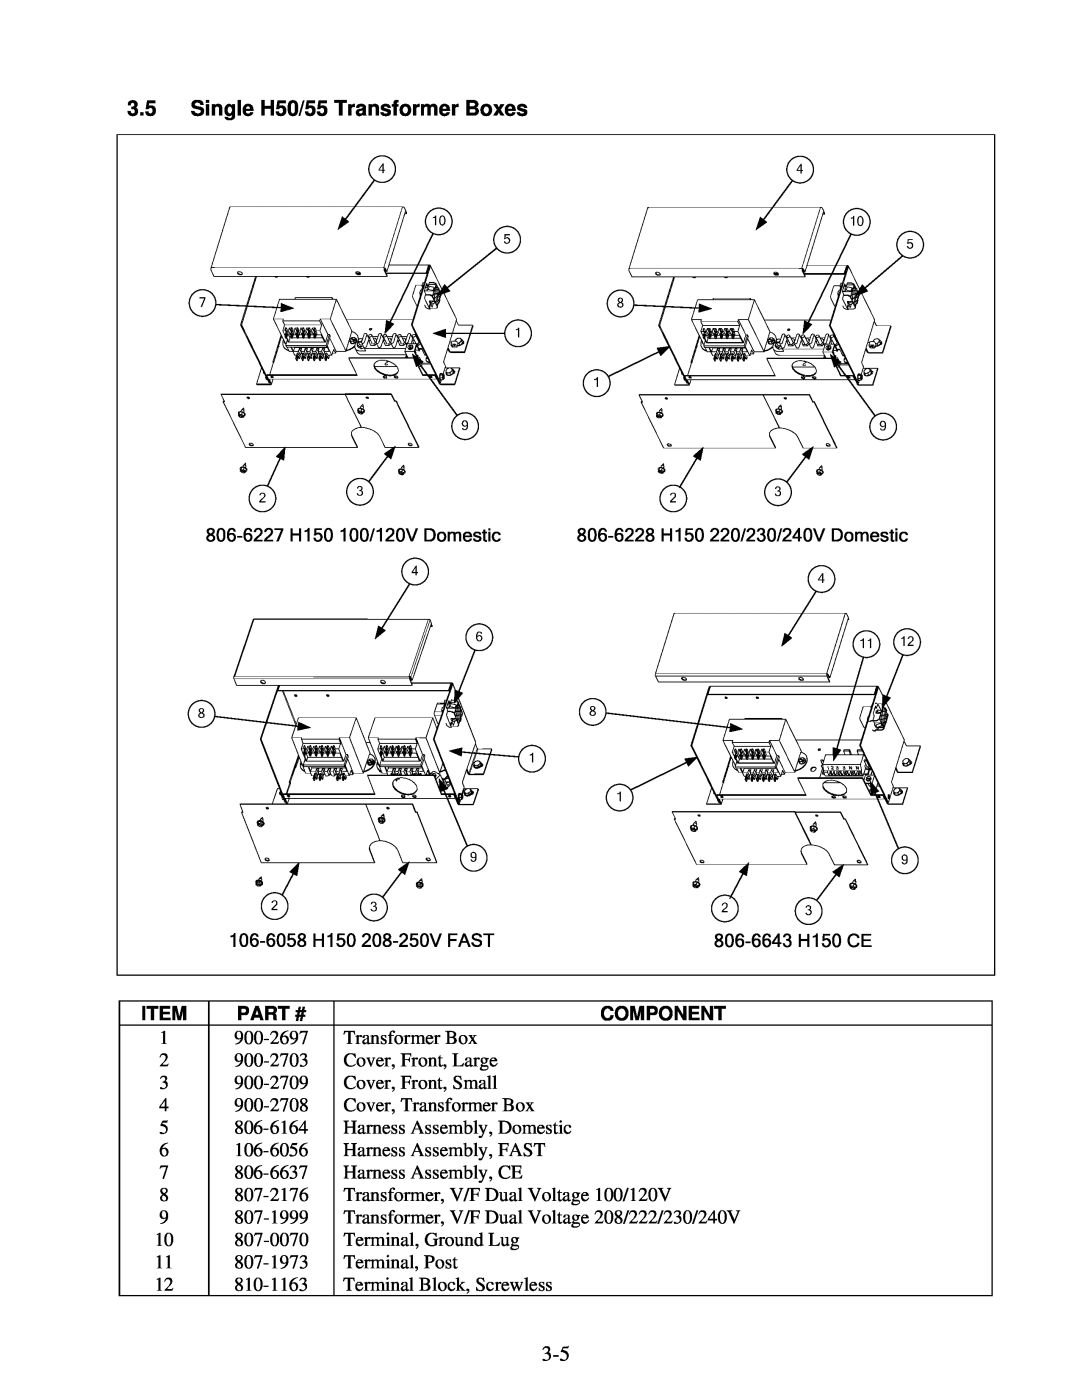 Frymaster manual 3.5Single H50/55 Transformer Boxes, Item, Part # 